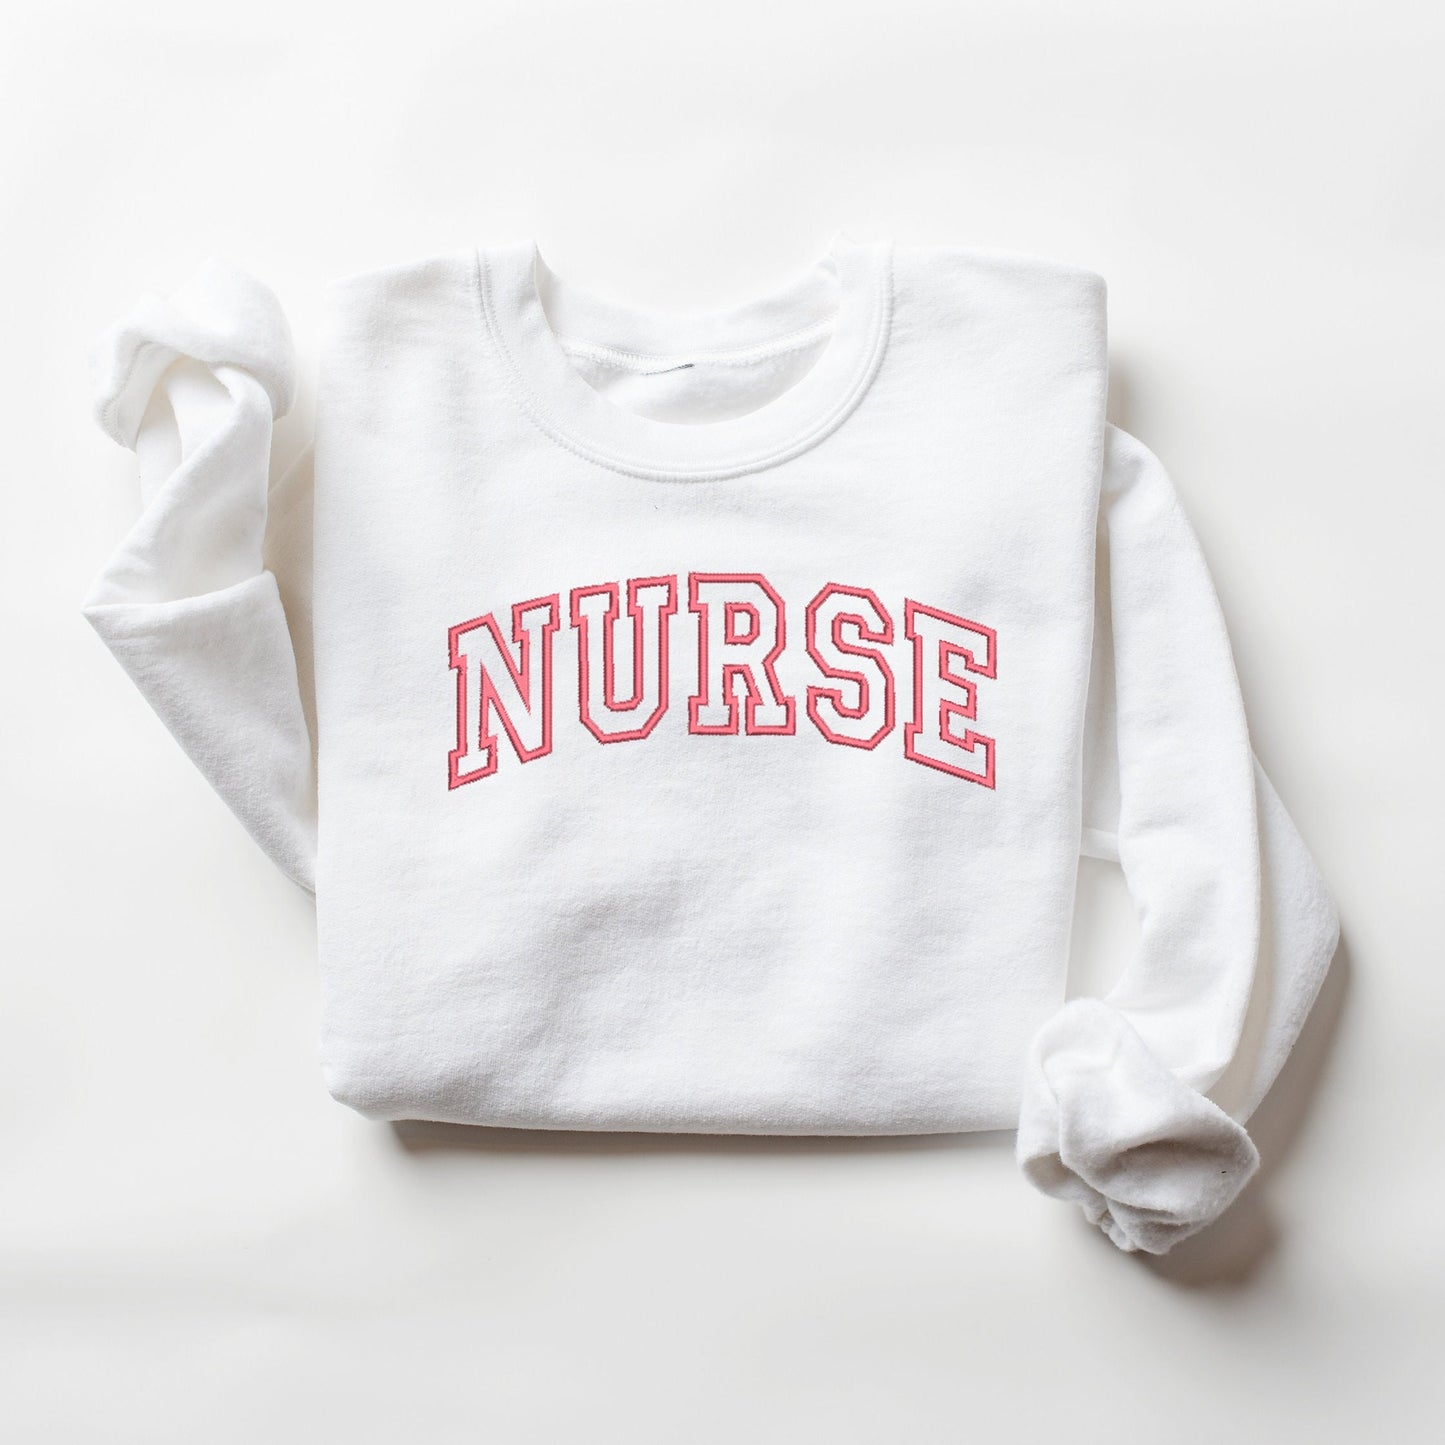 Embroidered Sweatshirt, Embroidery, Nurse Sweatshirt, Gifts for Nurse, Nurse Gift, Nurse Appreciation, Nurse Graduation Gift,  Minimalist